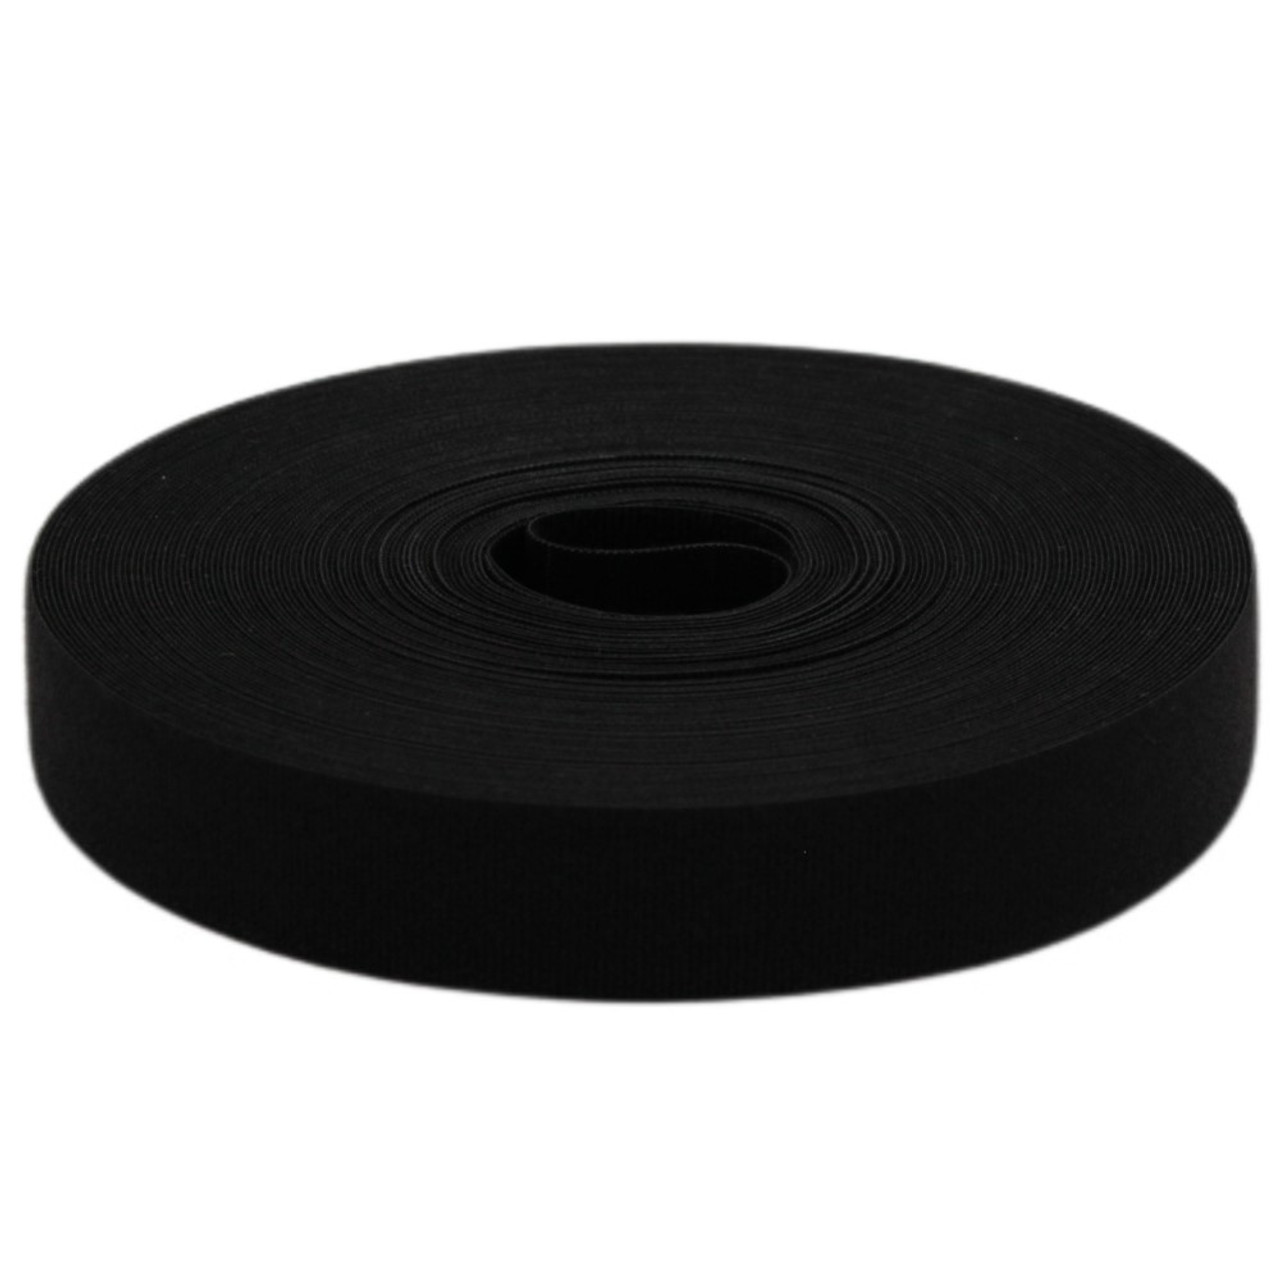 VELCRO® Brand Qwik Tie Tape - 1 x 25 yard rolls- Black or white